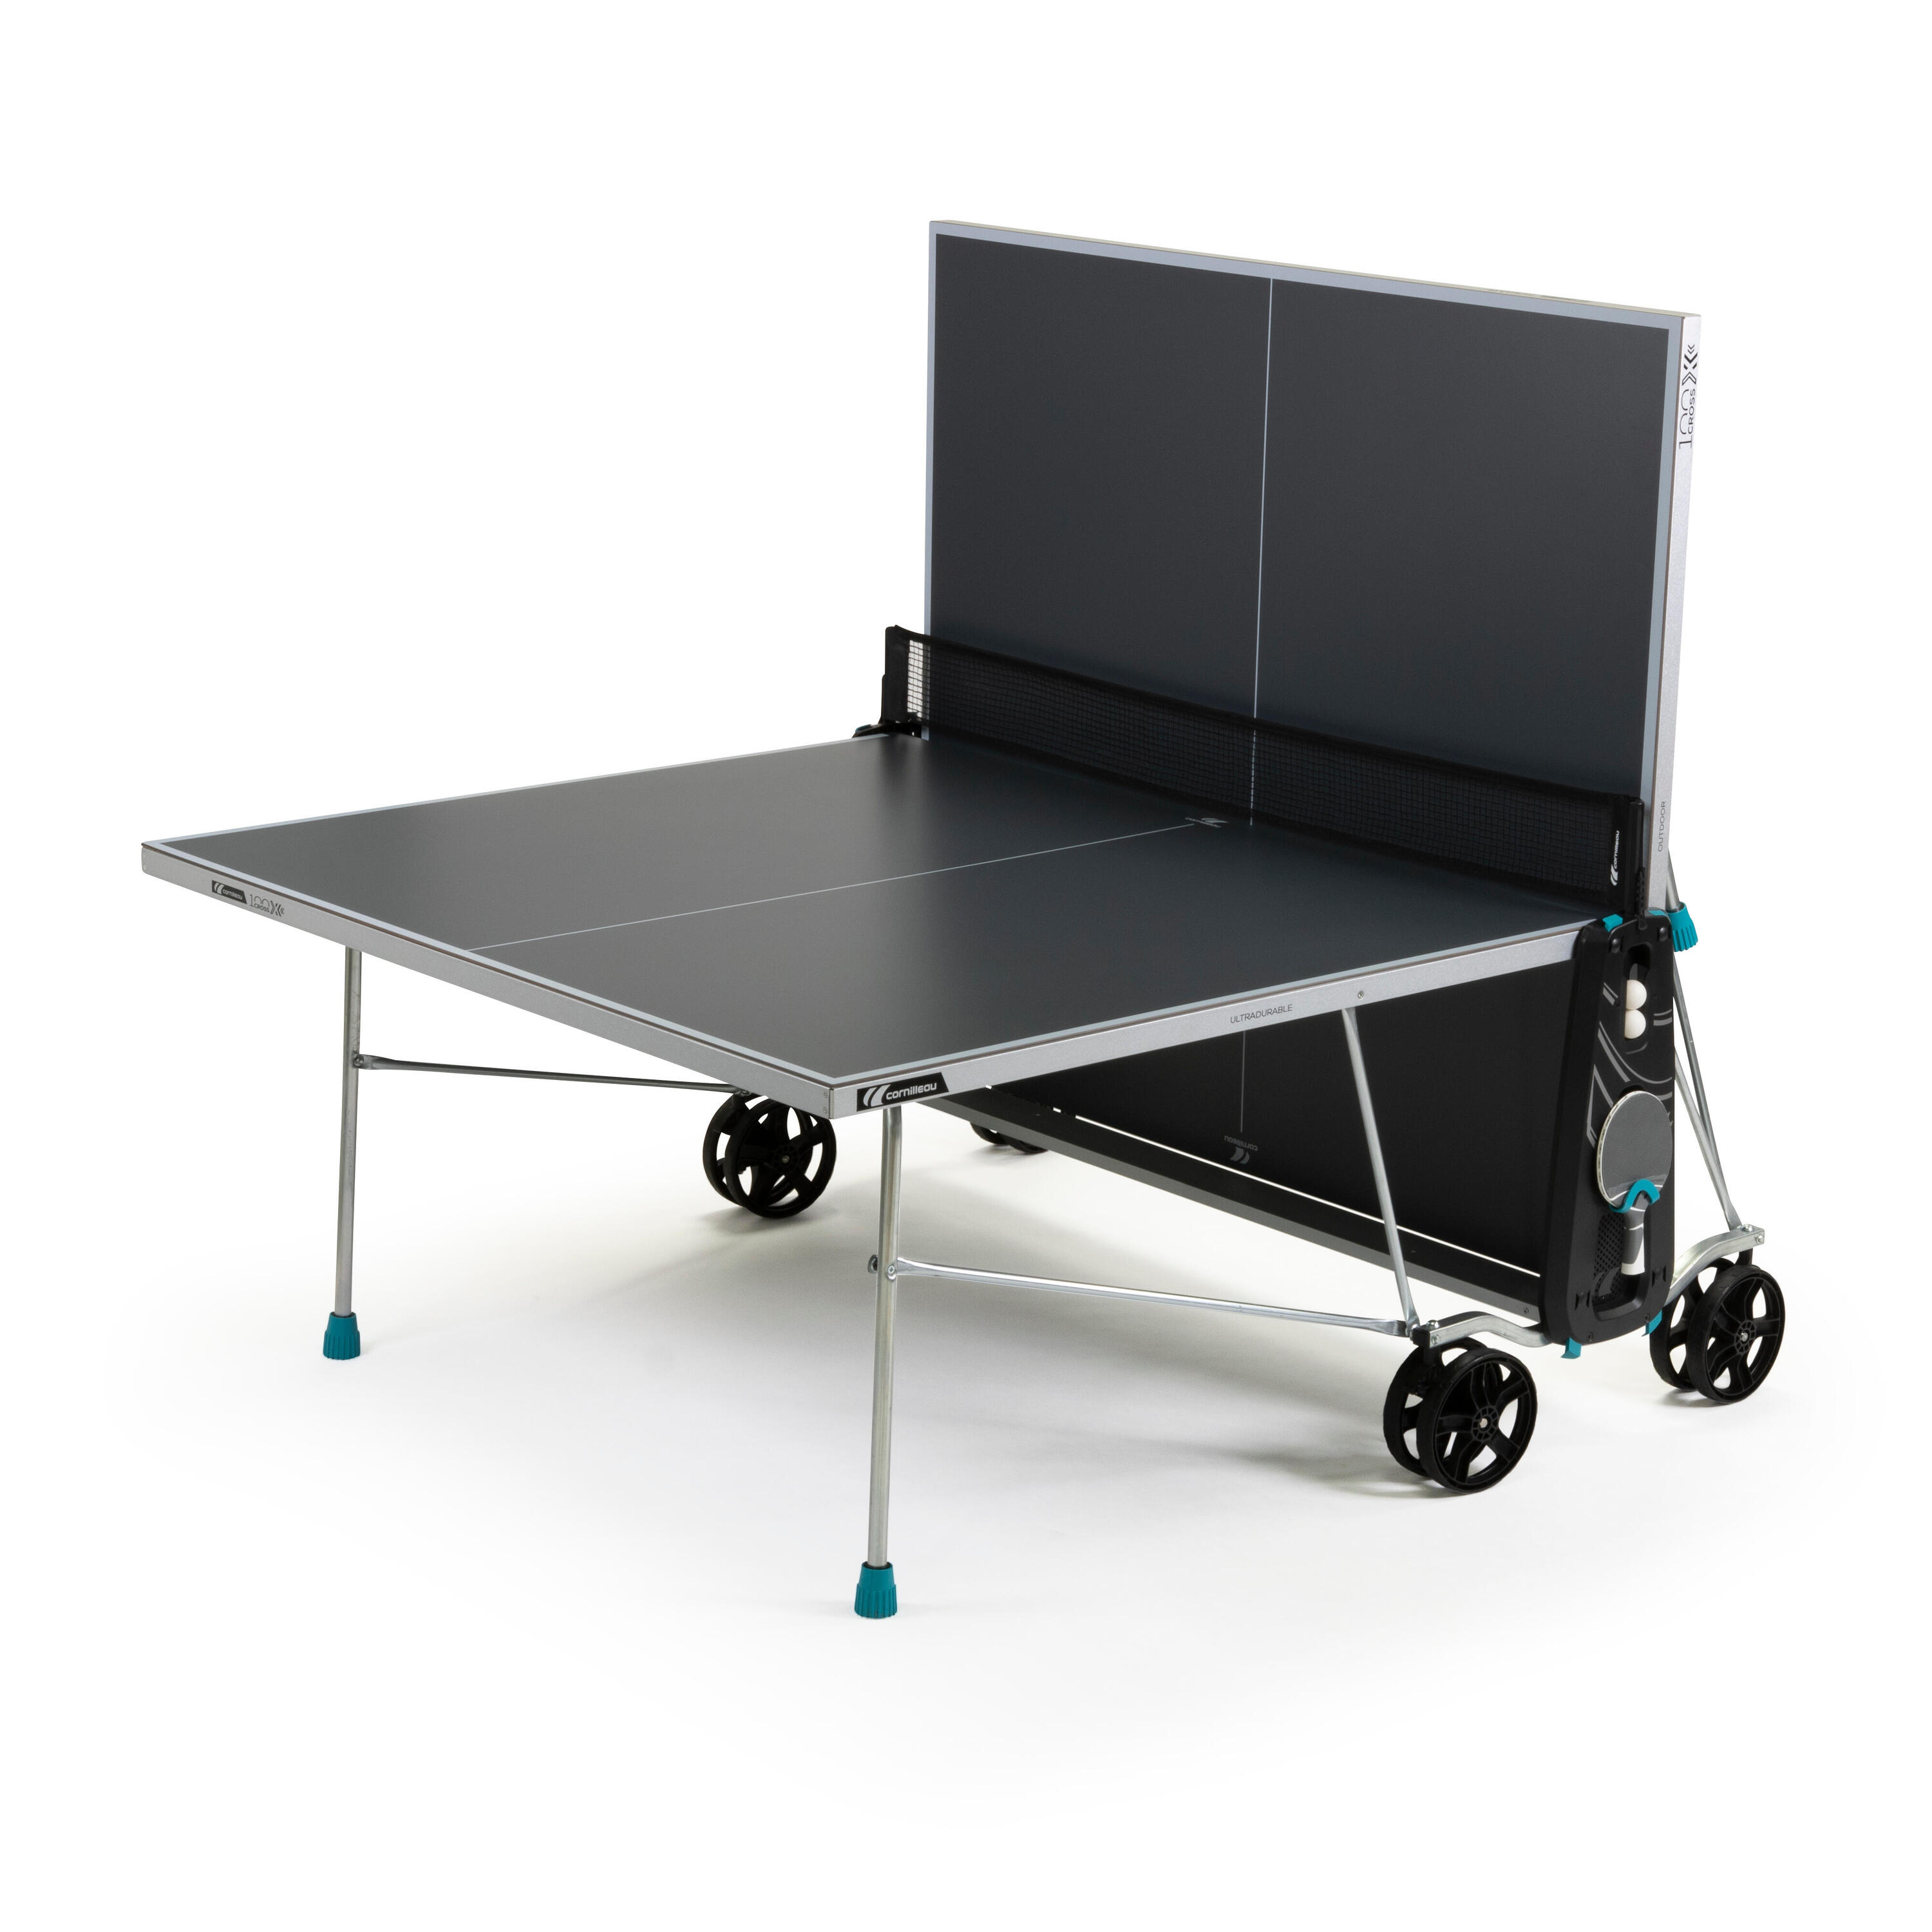 Outdoor Table Tennis Table 100X - Grey 2/14